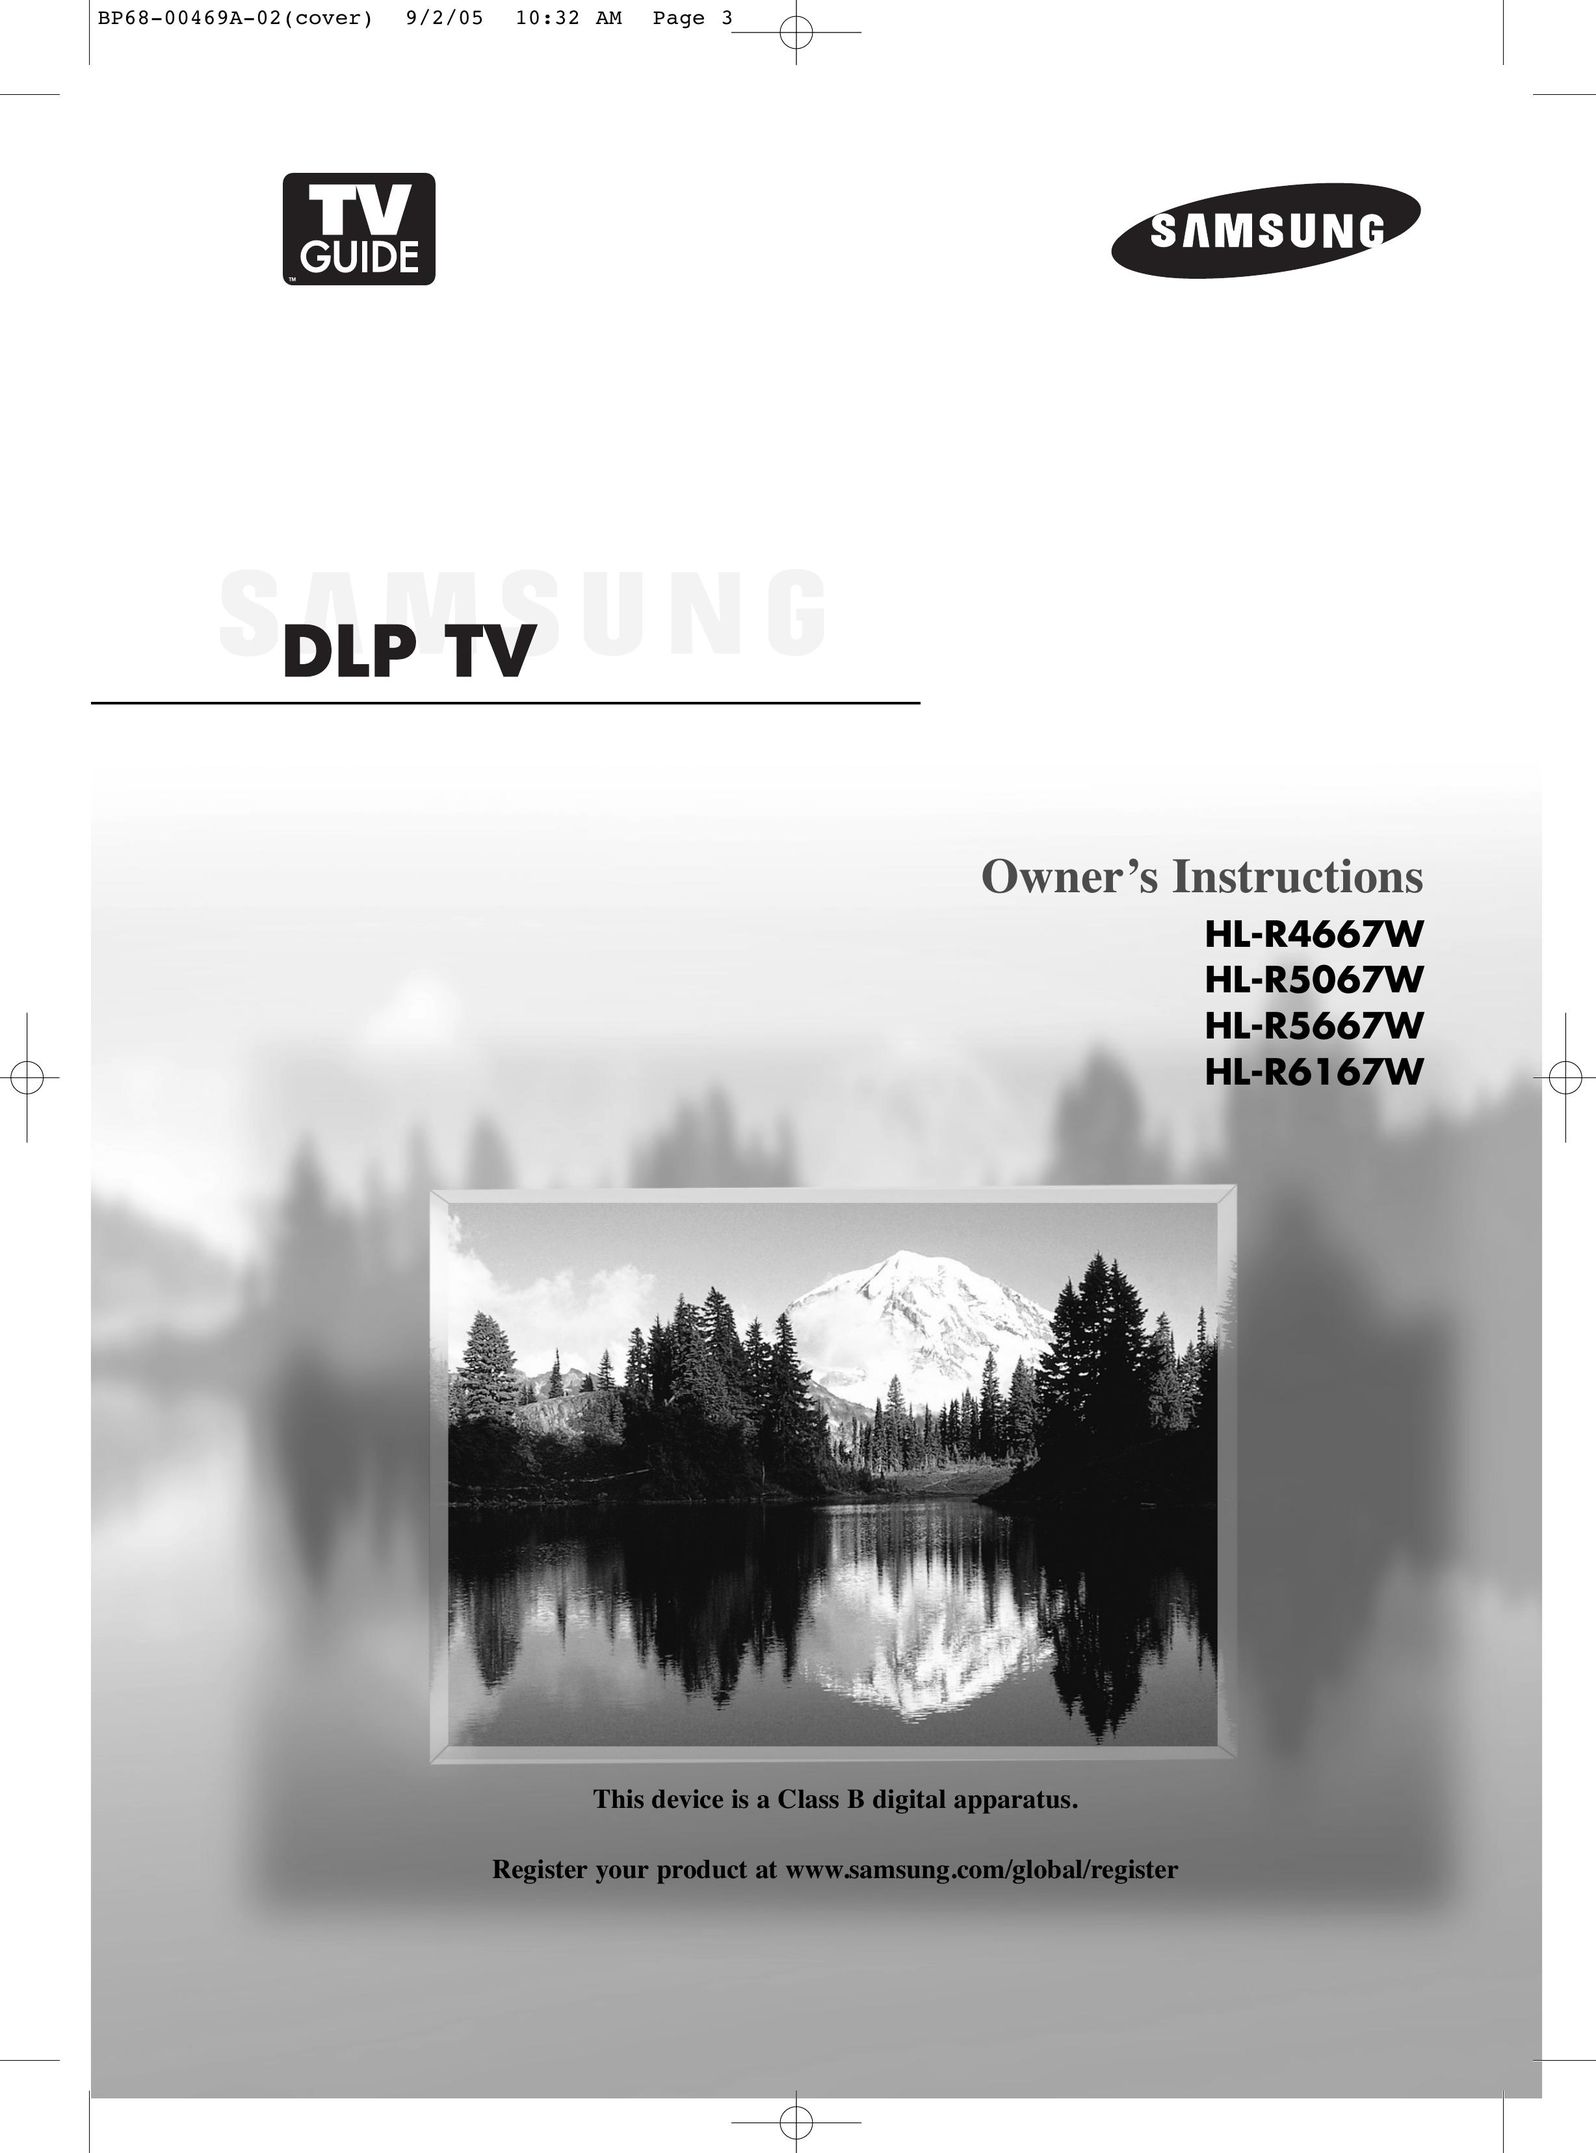 Samsung HL-R5067W TV Receiver User Manual